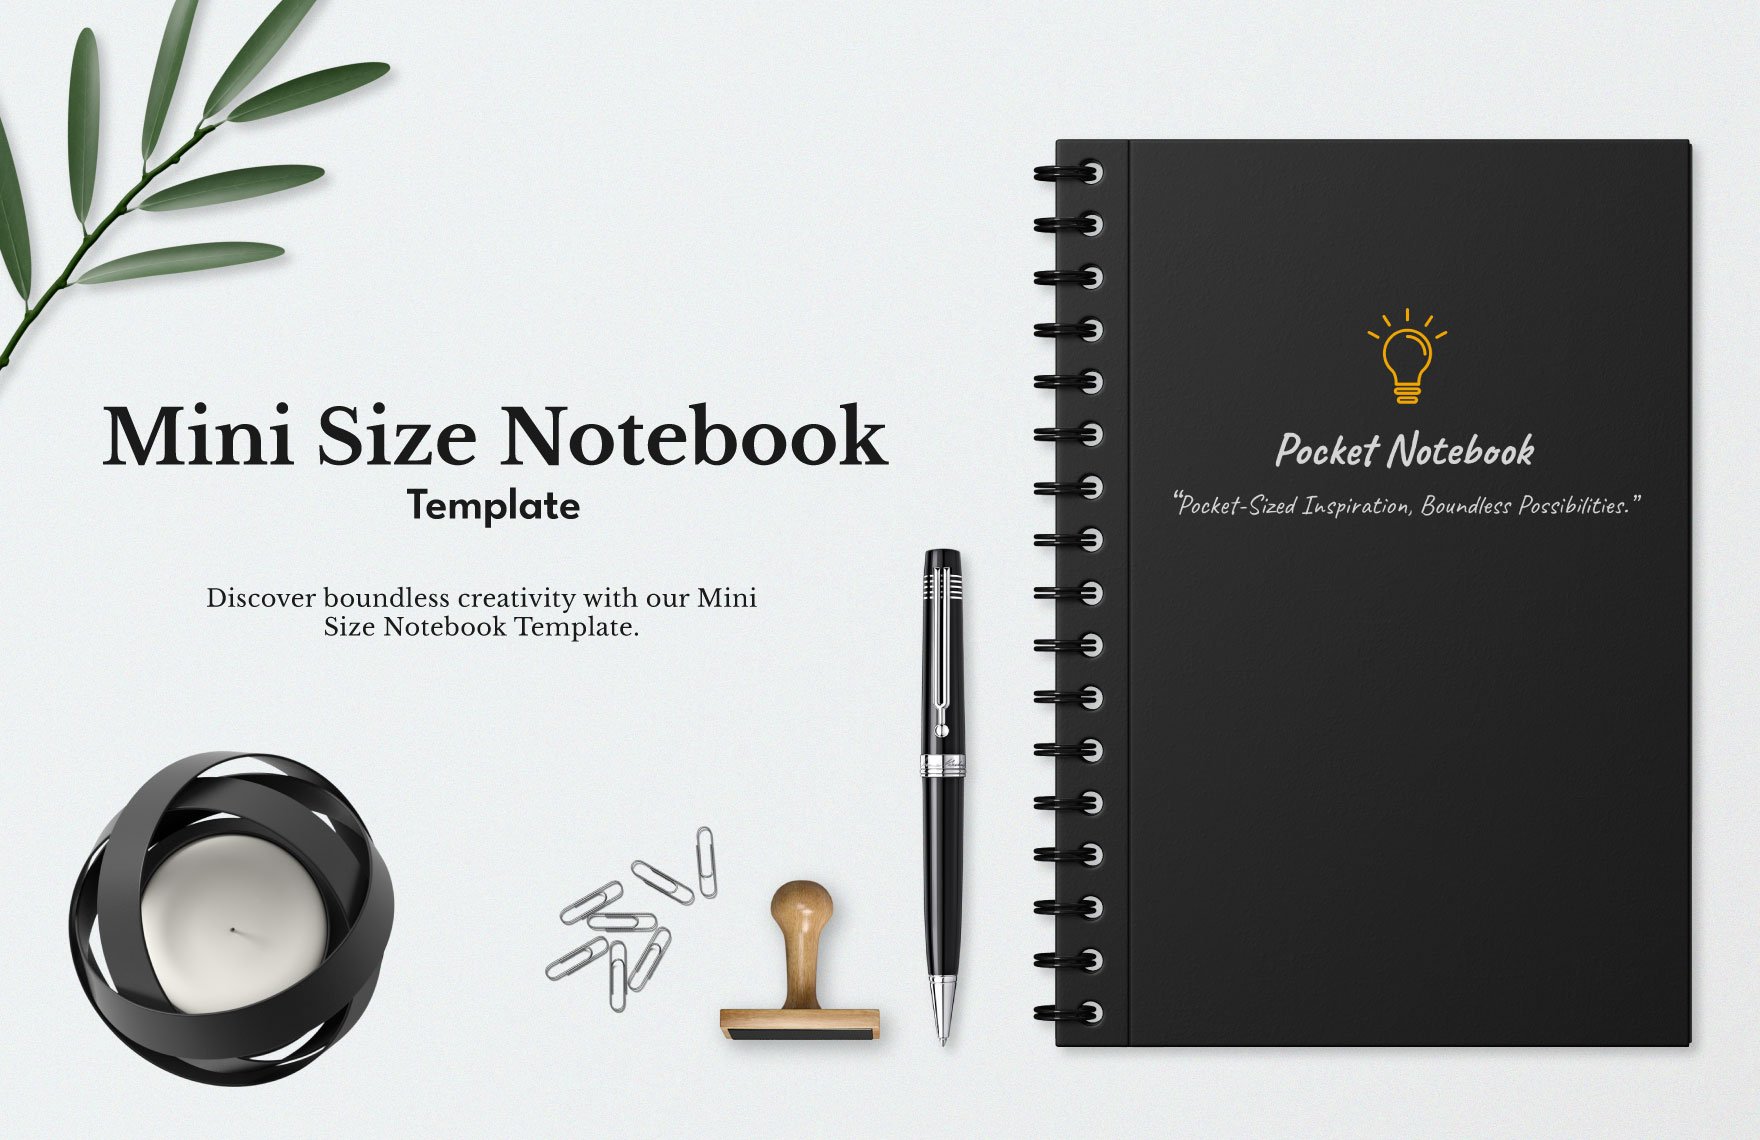 Mini Size Notebook Template